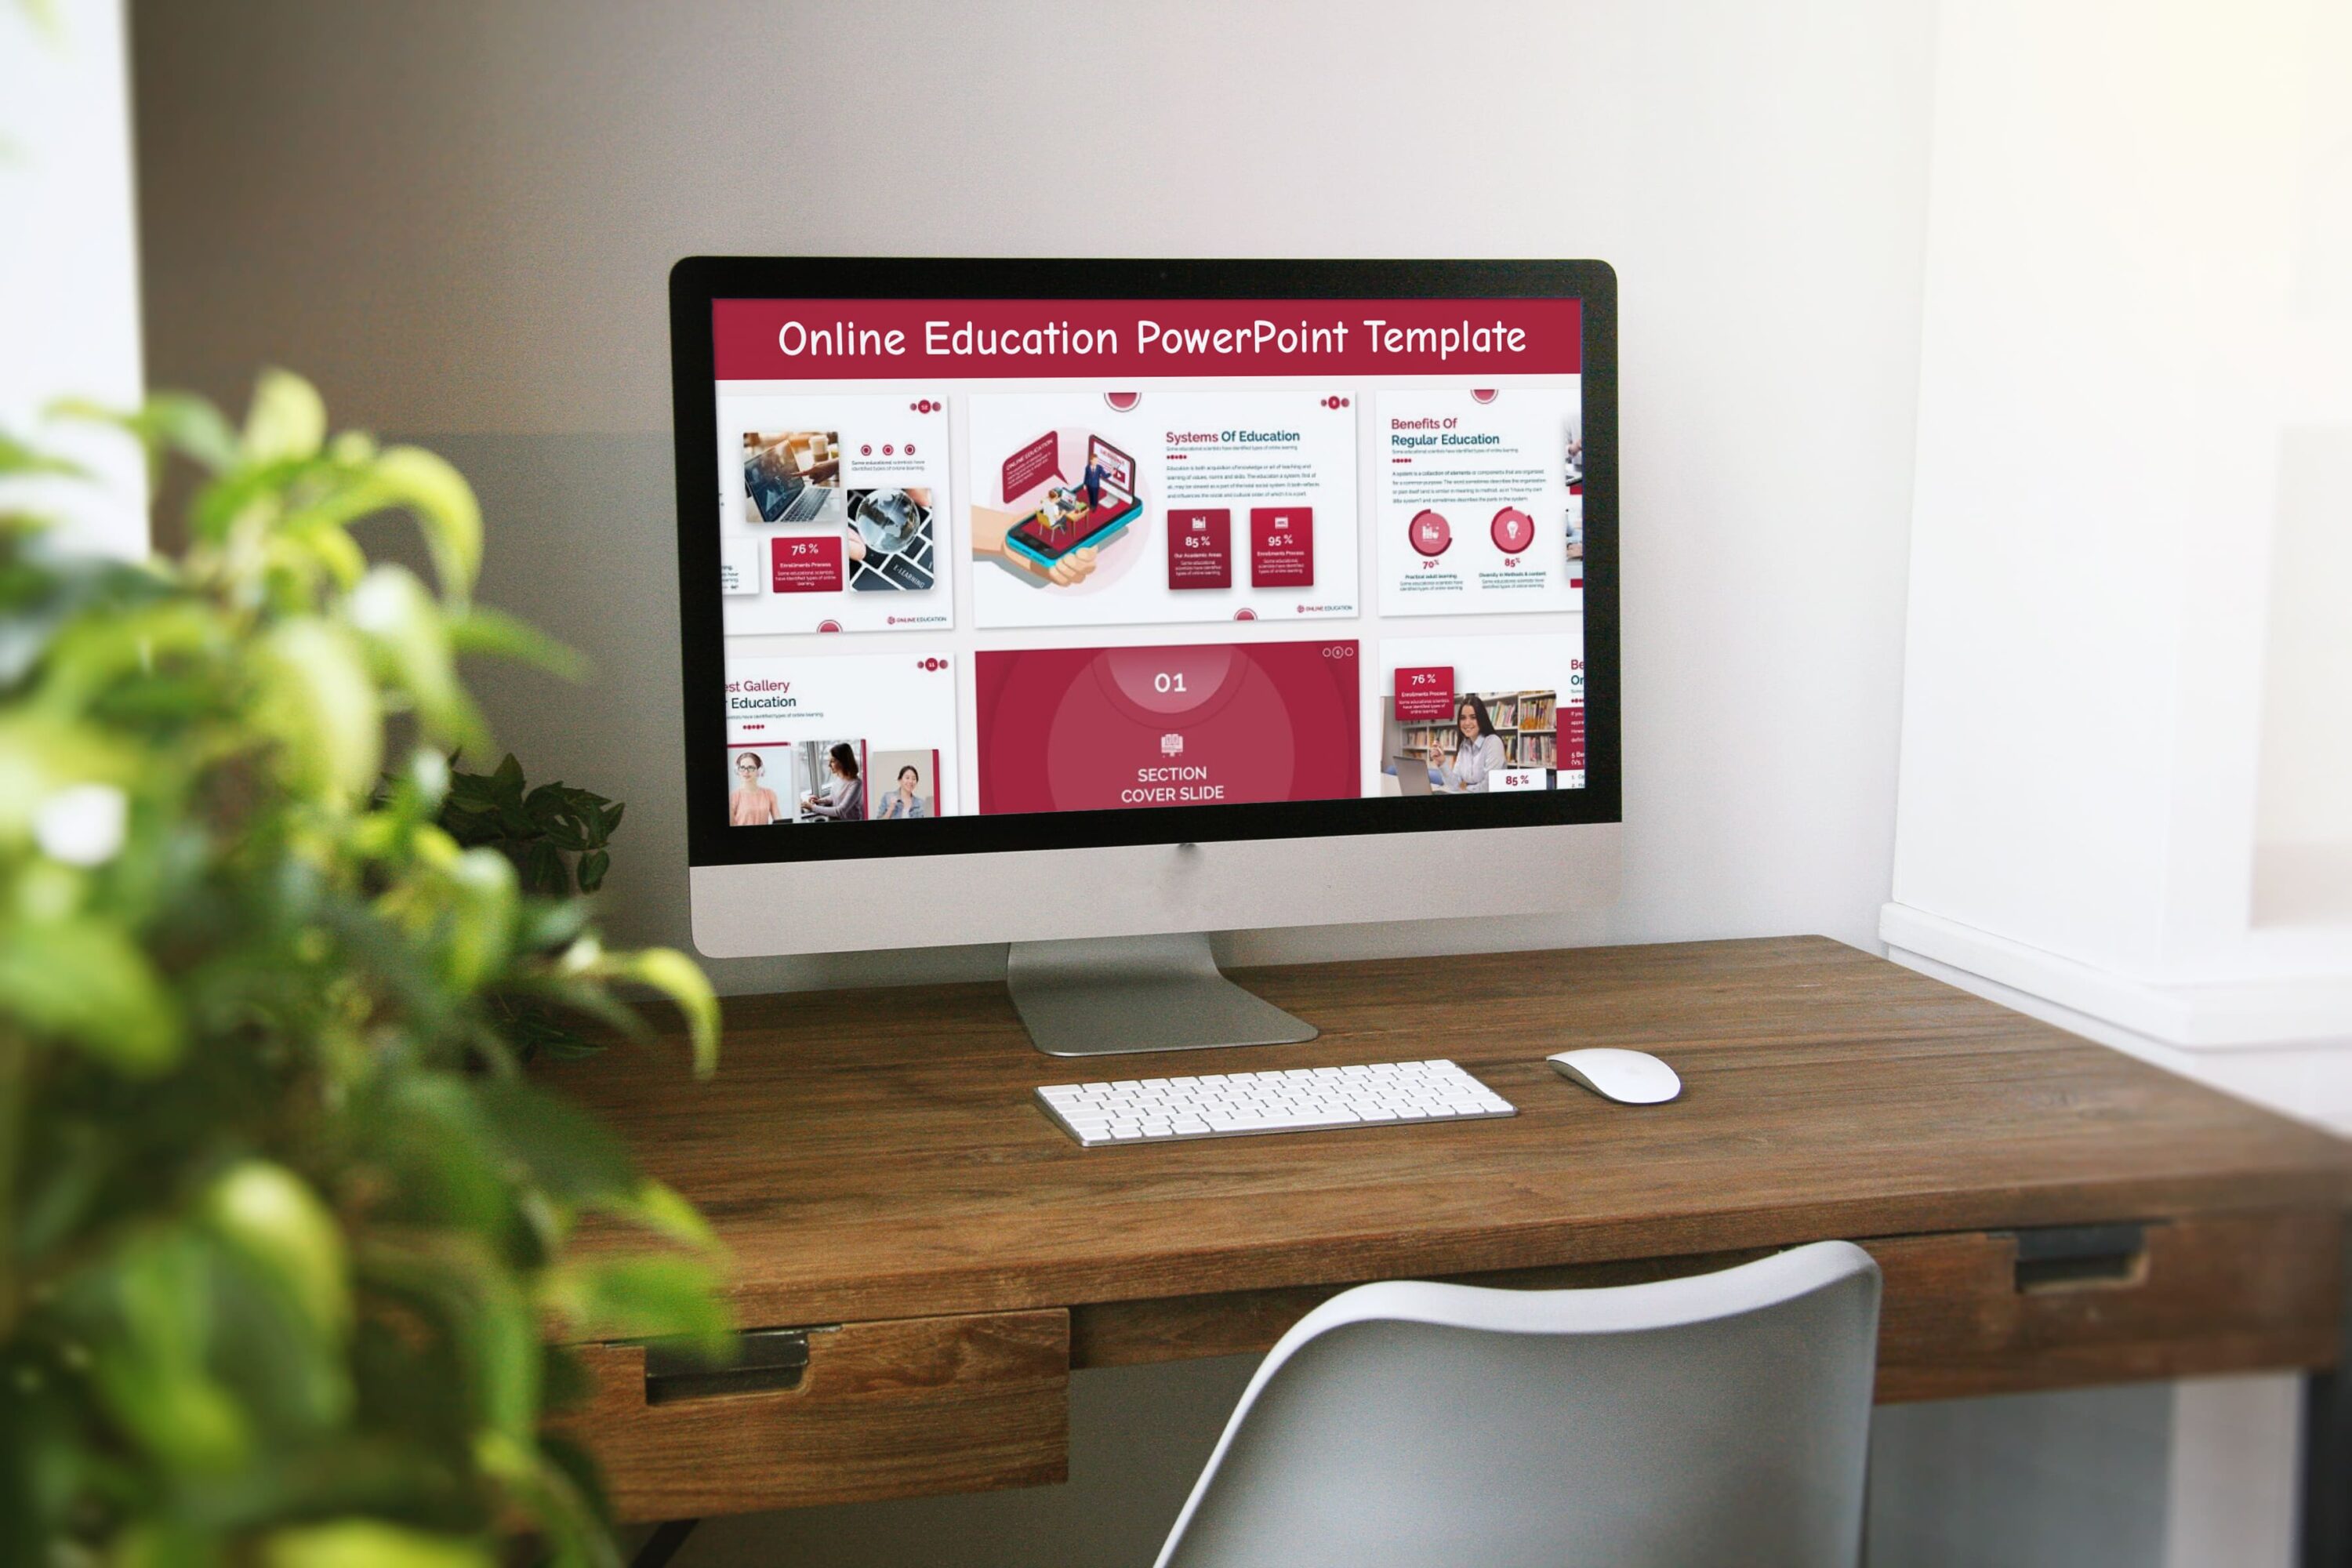 Online Education PowerPoint Template - desktop.